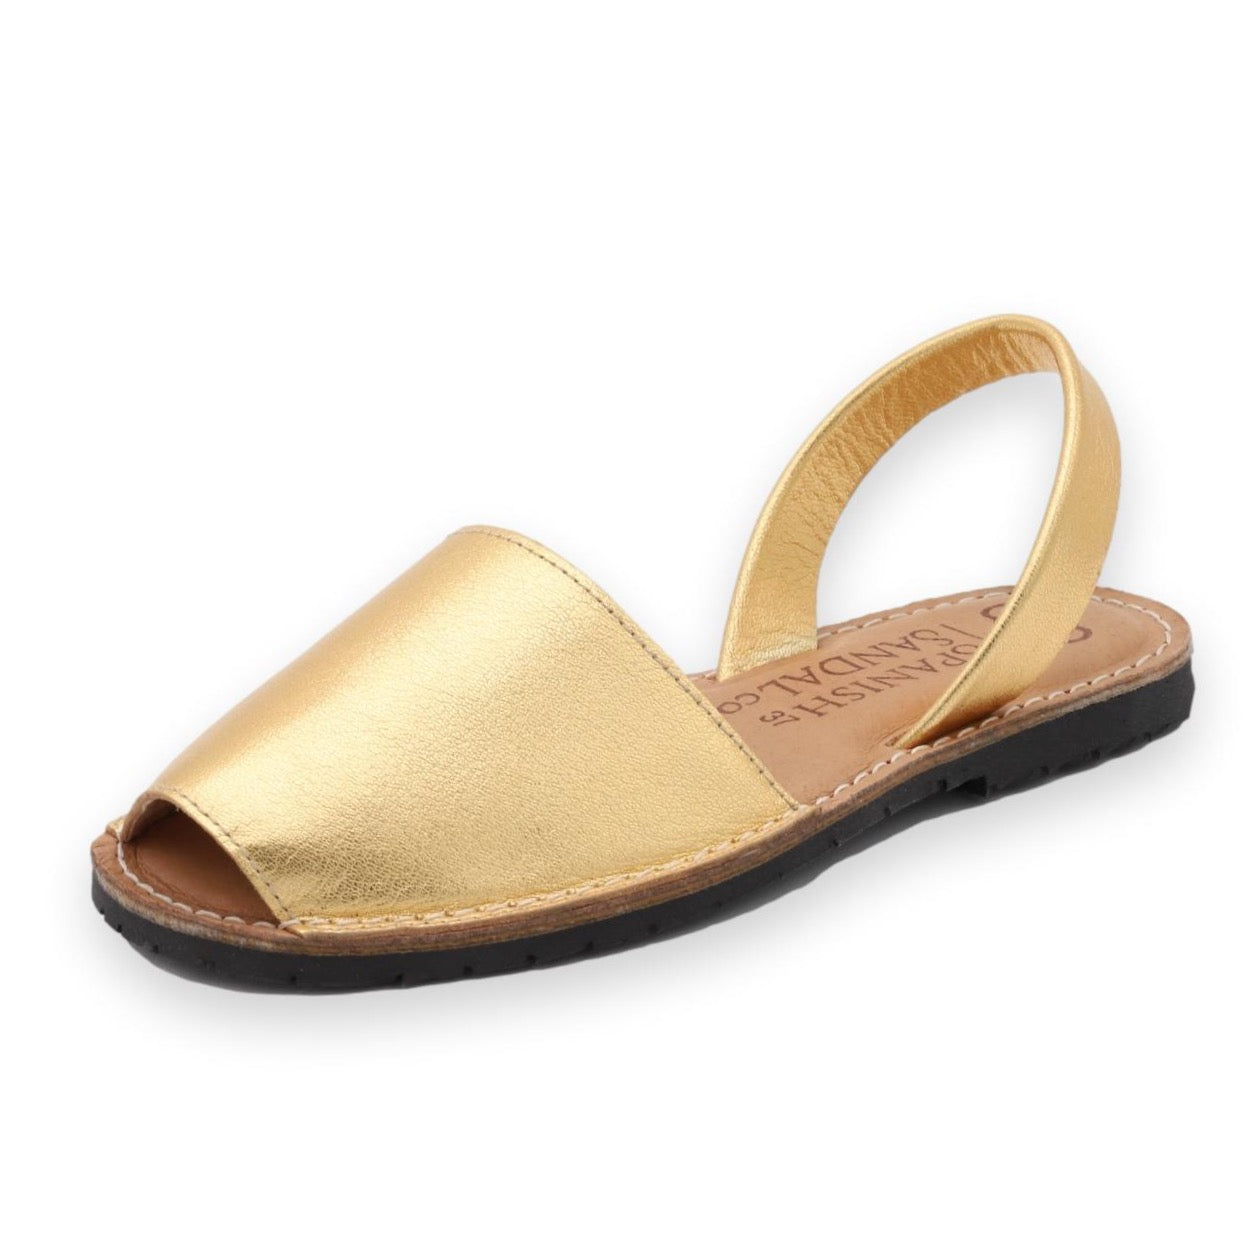 Metallic brass sandals